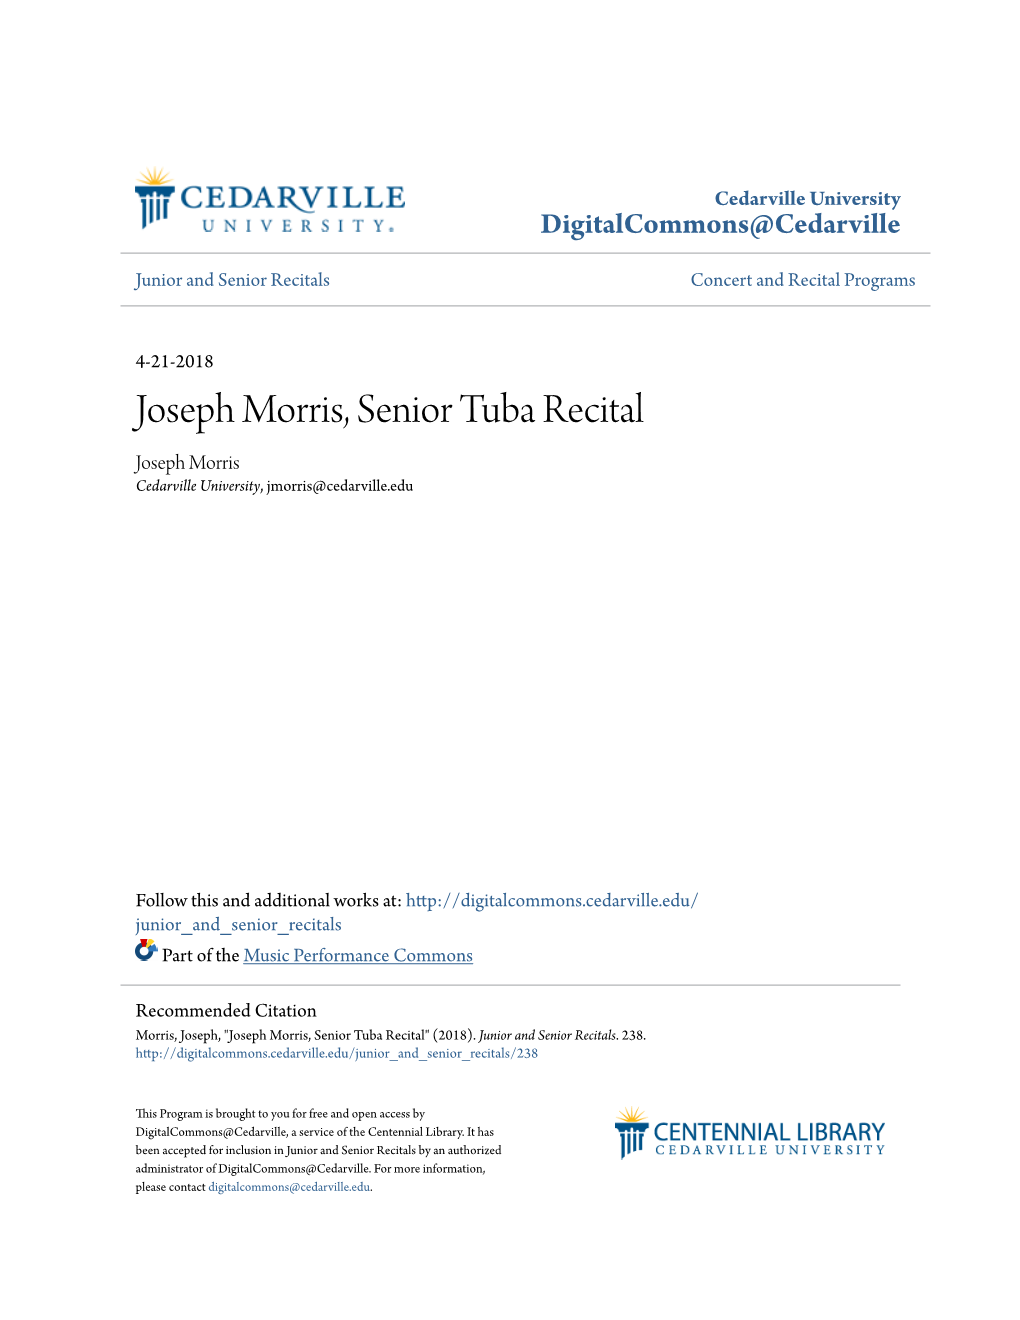 Joseph Morris, Senior Tuba Recital Joseph Morris Cedarville University, Jmorris@Cedarville.Edu